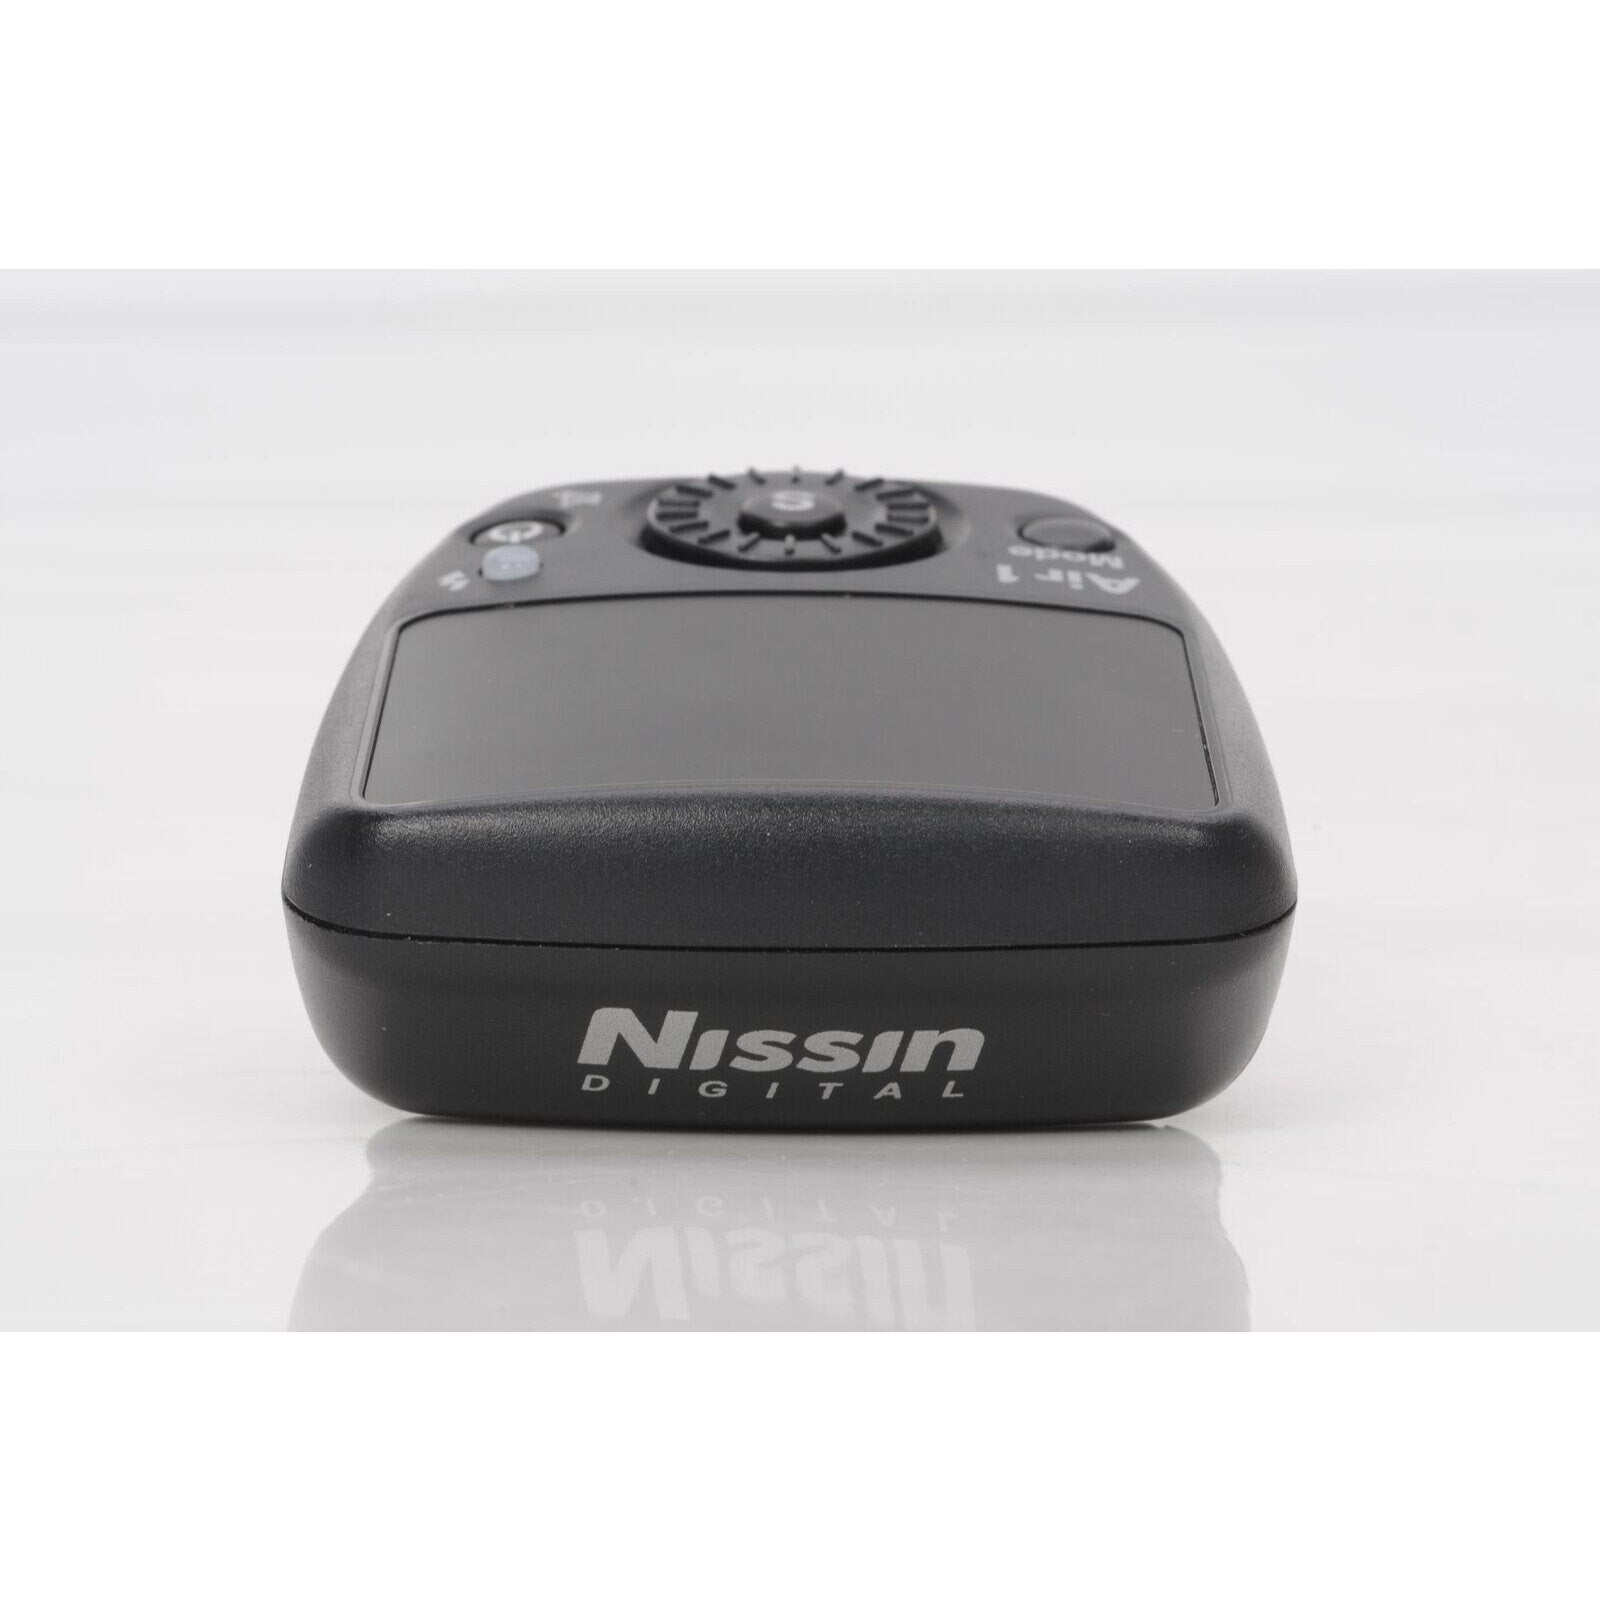 Nissin Air 1 Commander for Nikon Cameras